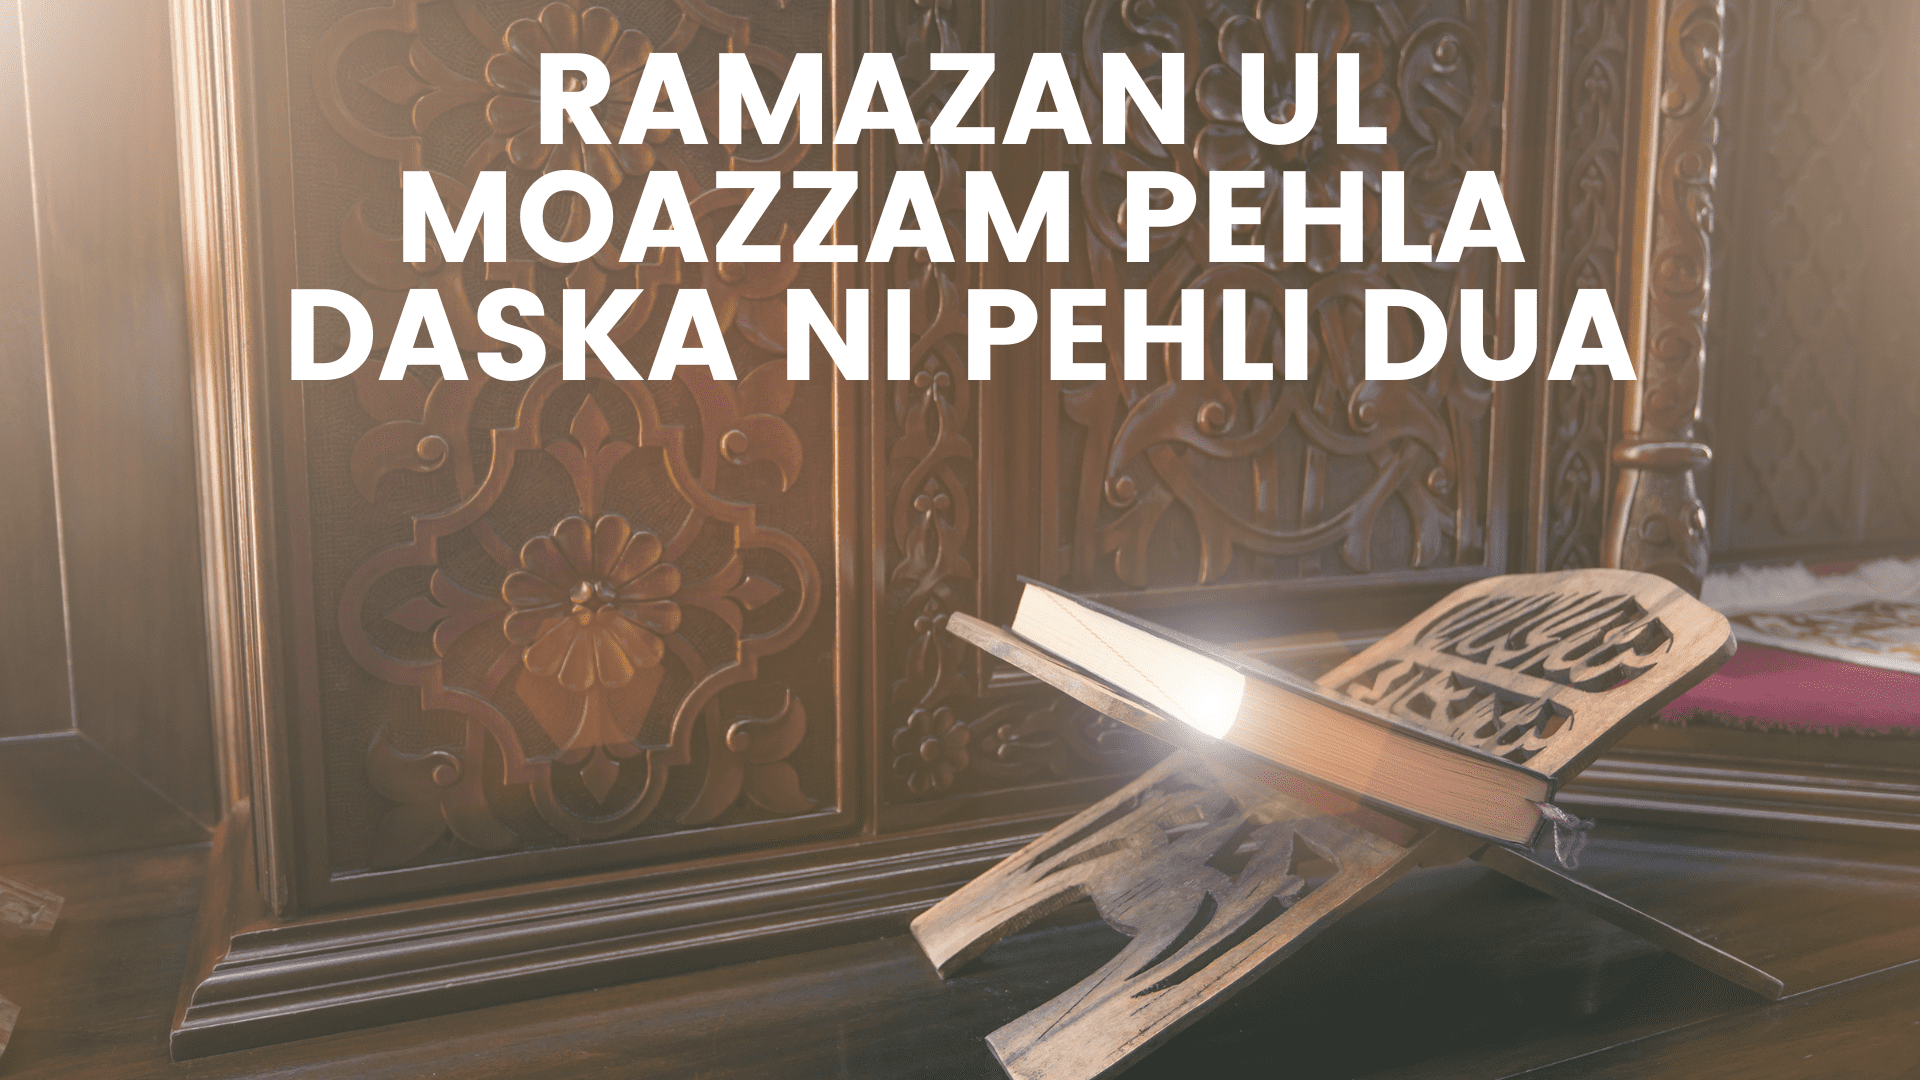 Ramazan ul Moazzam Pehla Daska Ni Pehli Dua